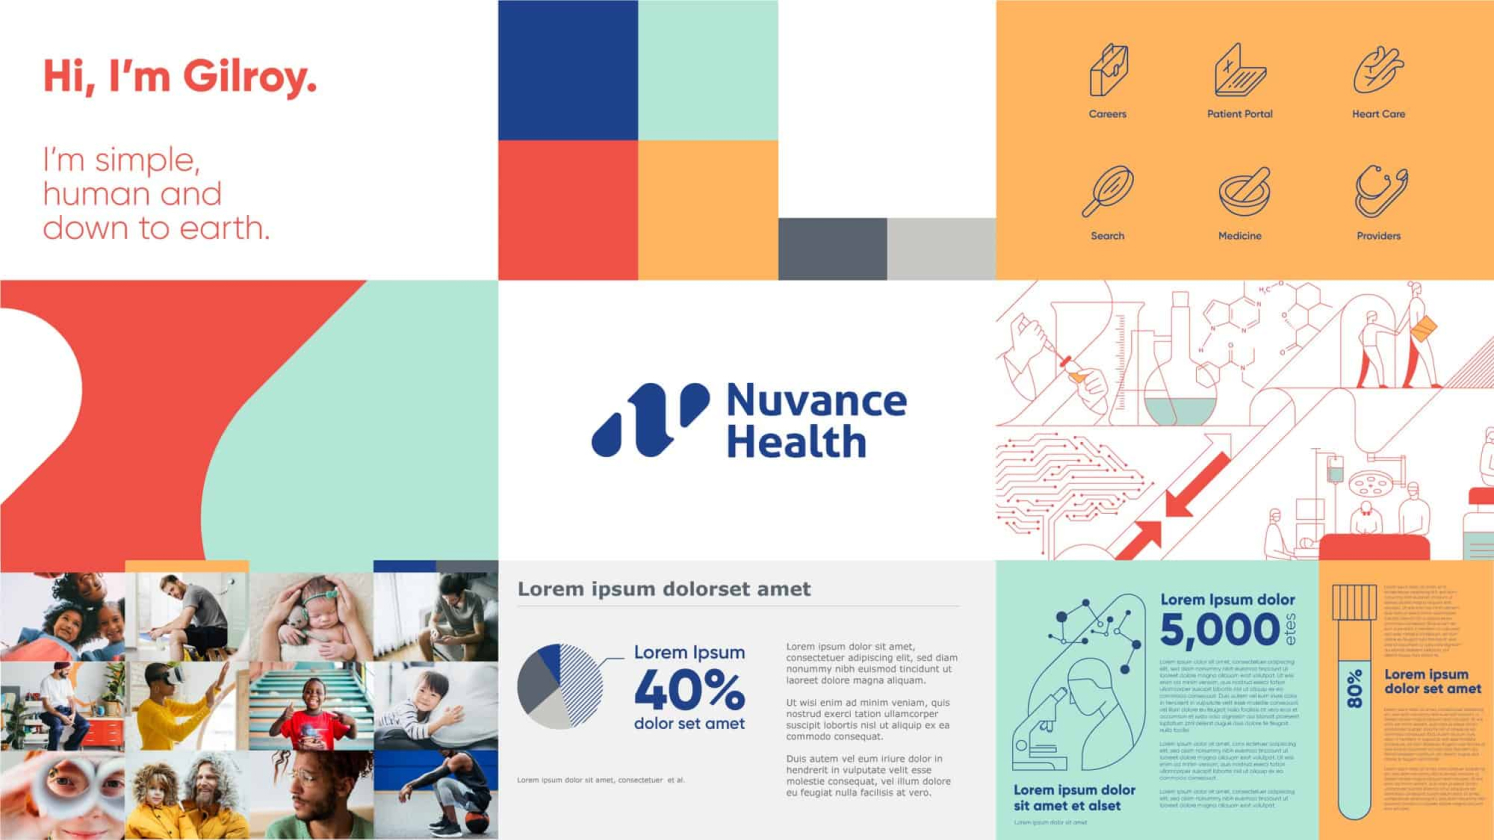 Nuvance - Brand assets